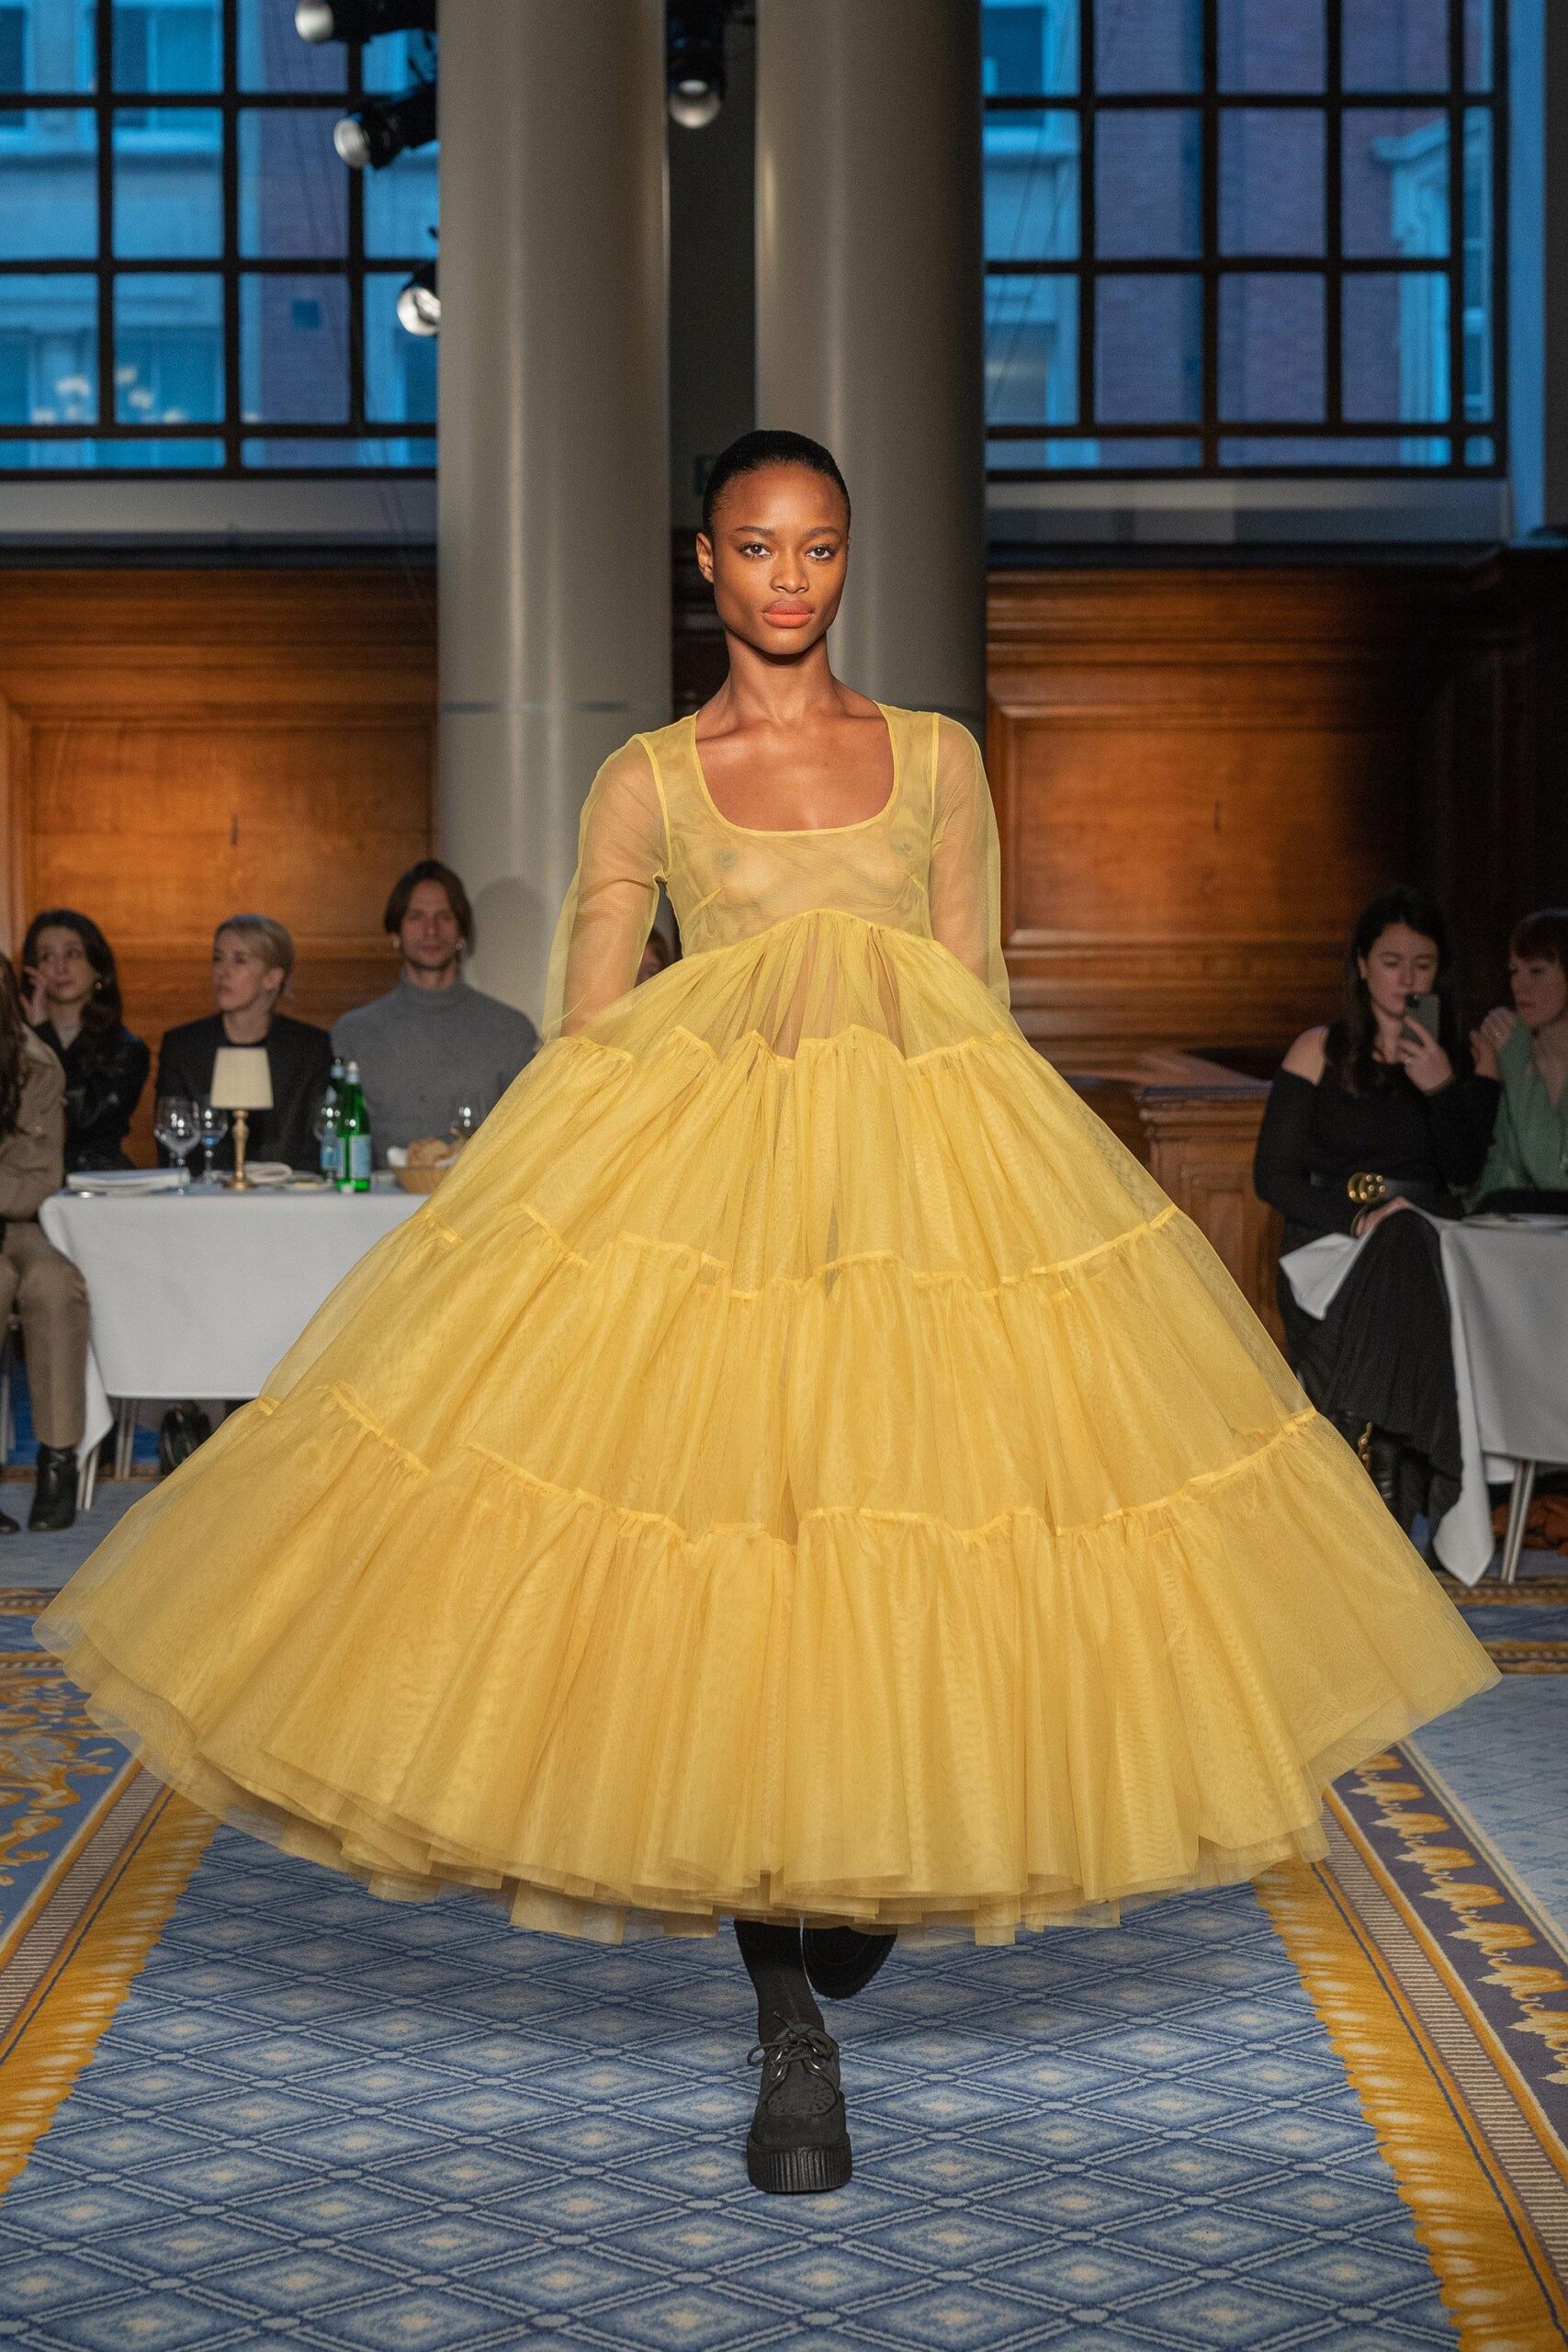 Graceful Glamour: Tulle Dresses for Ethereal Elegance